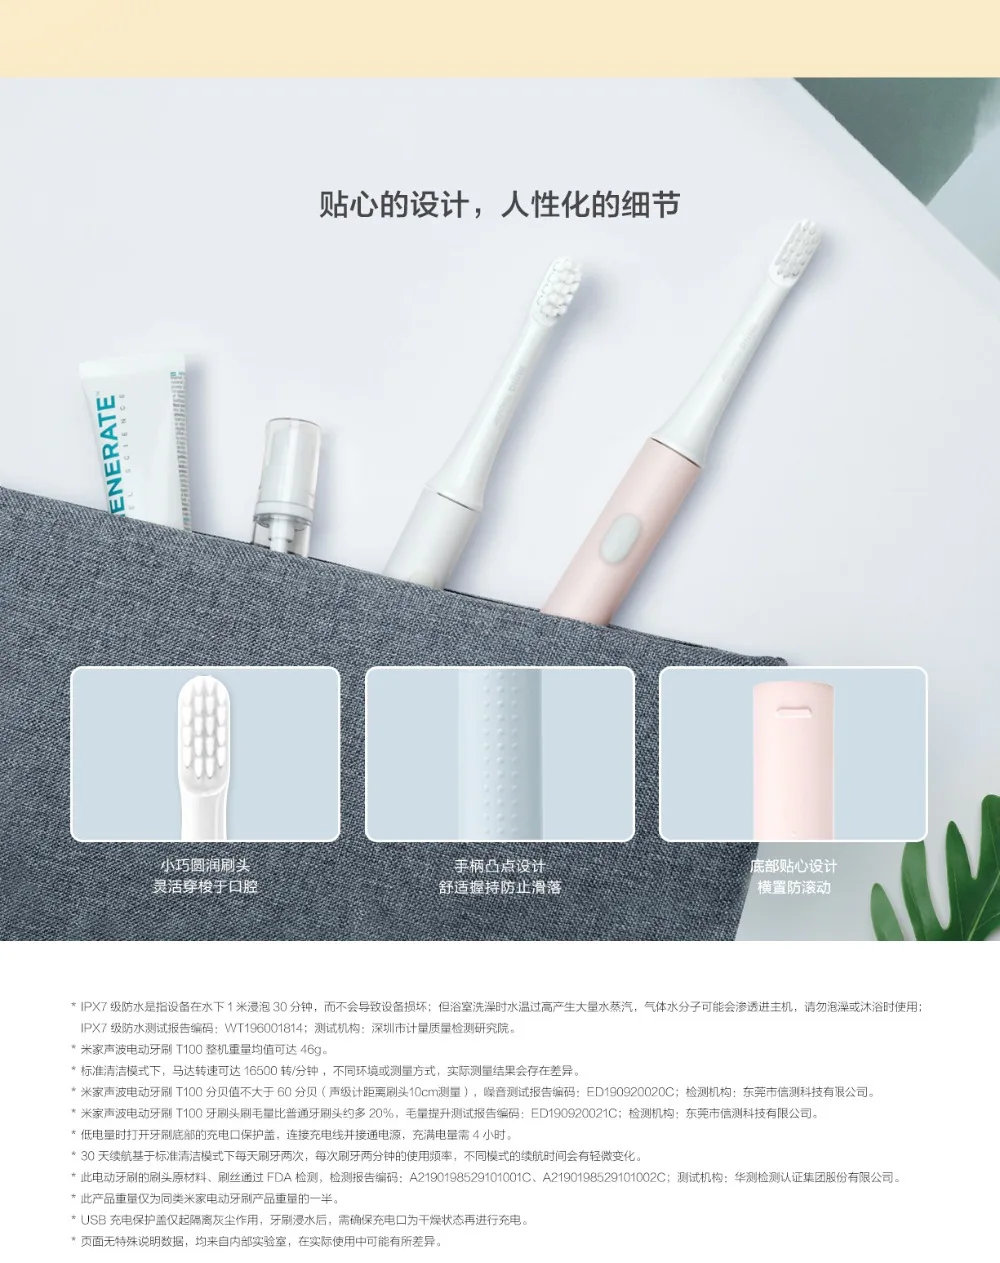 Original Xiaomi Mijia T100 Mi Smart Electric Toothbrush (16)